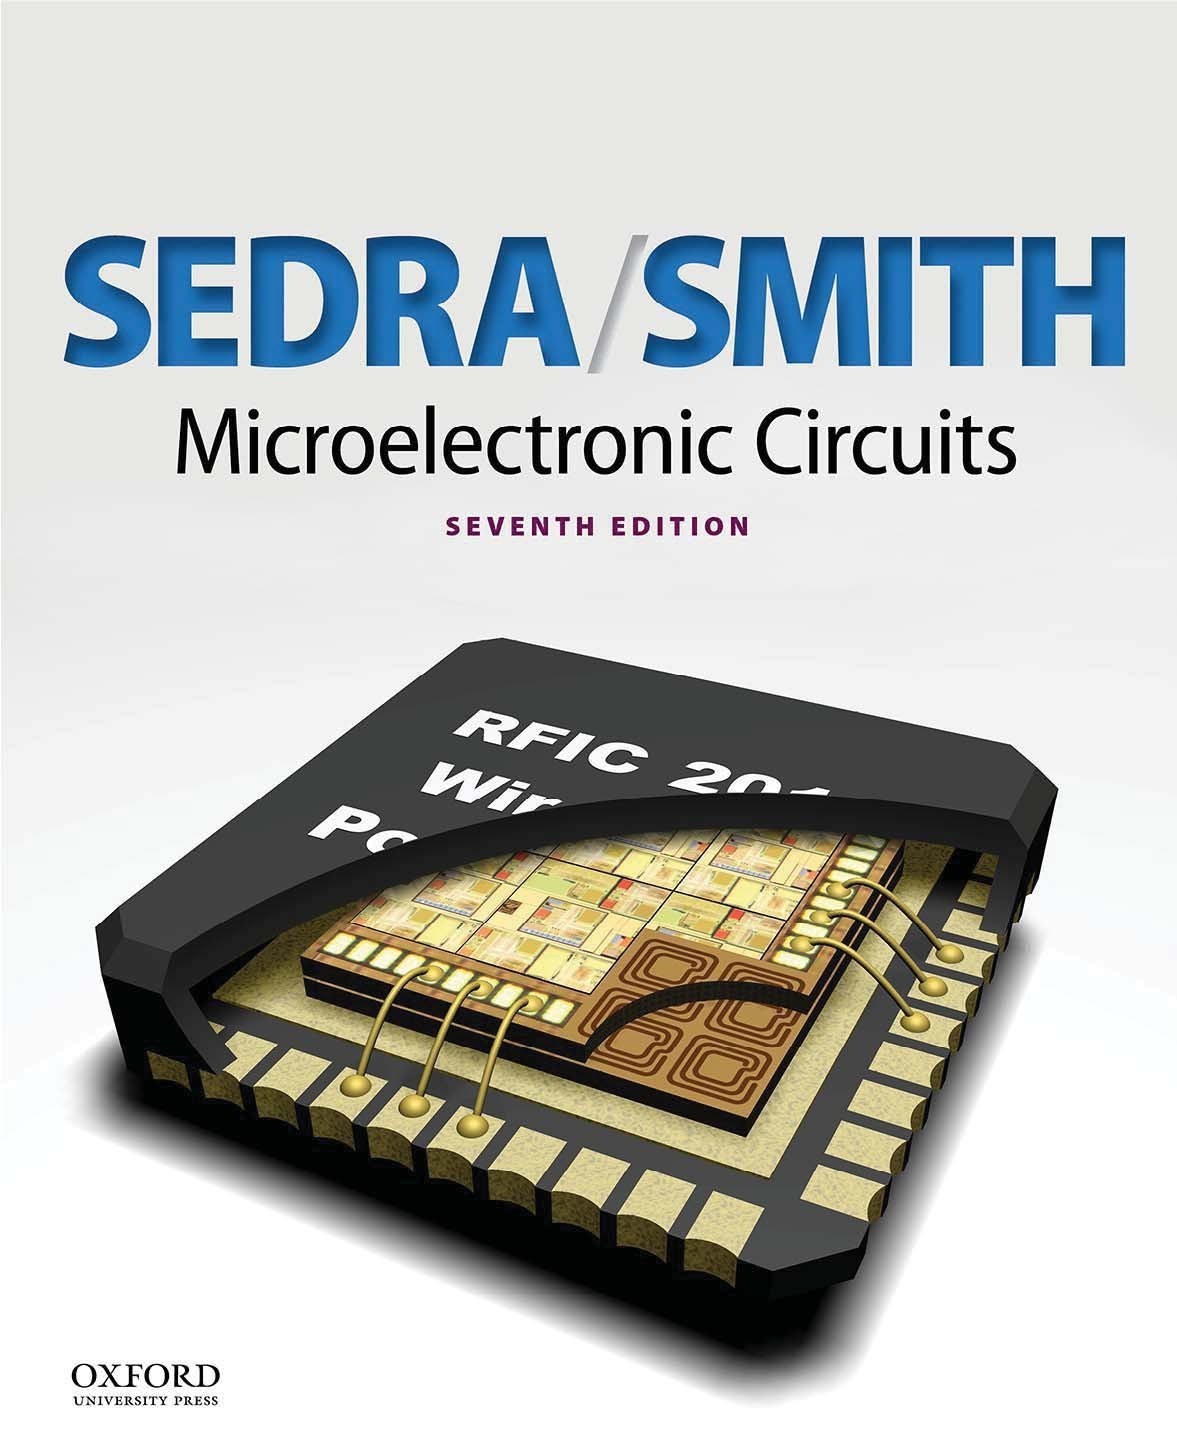 sedra smith microelectronic circuits pdf